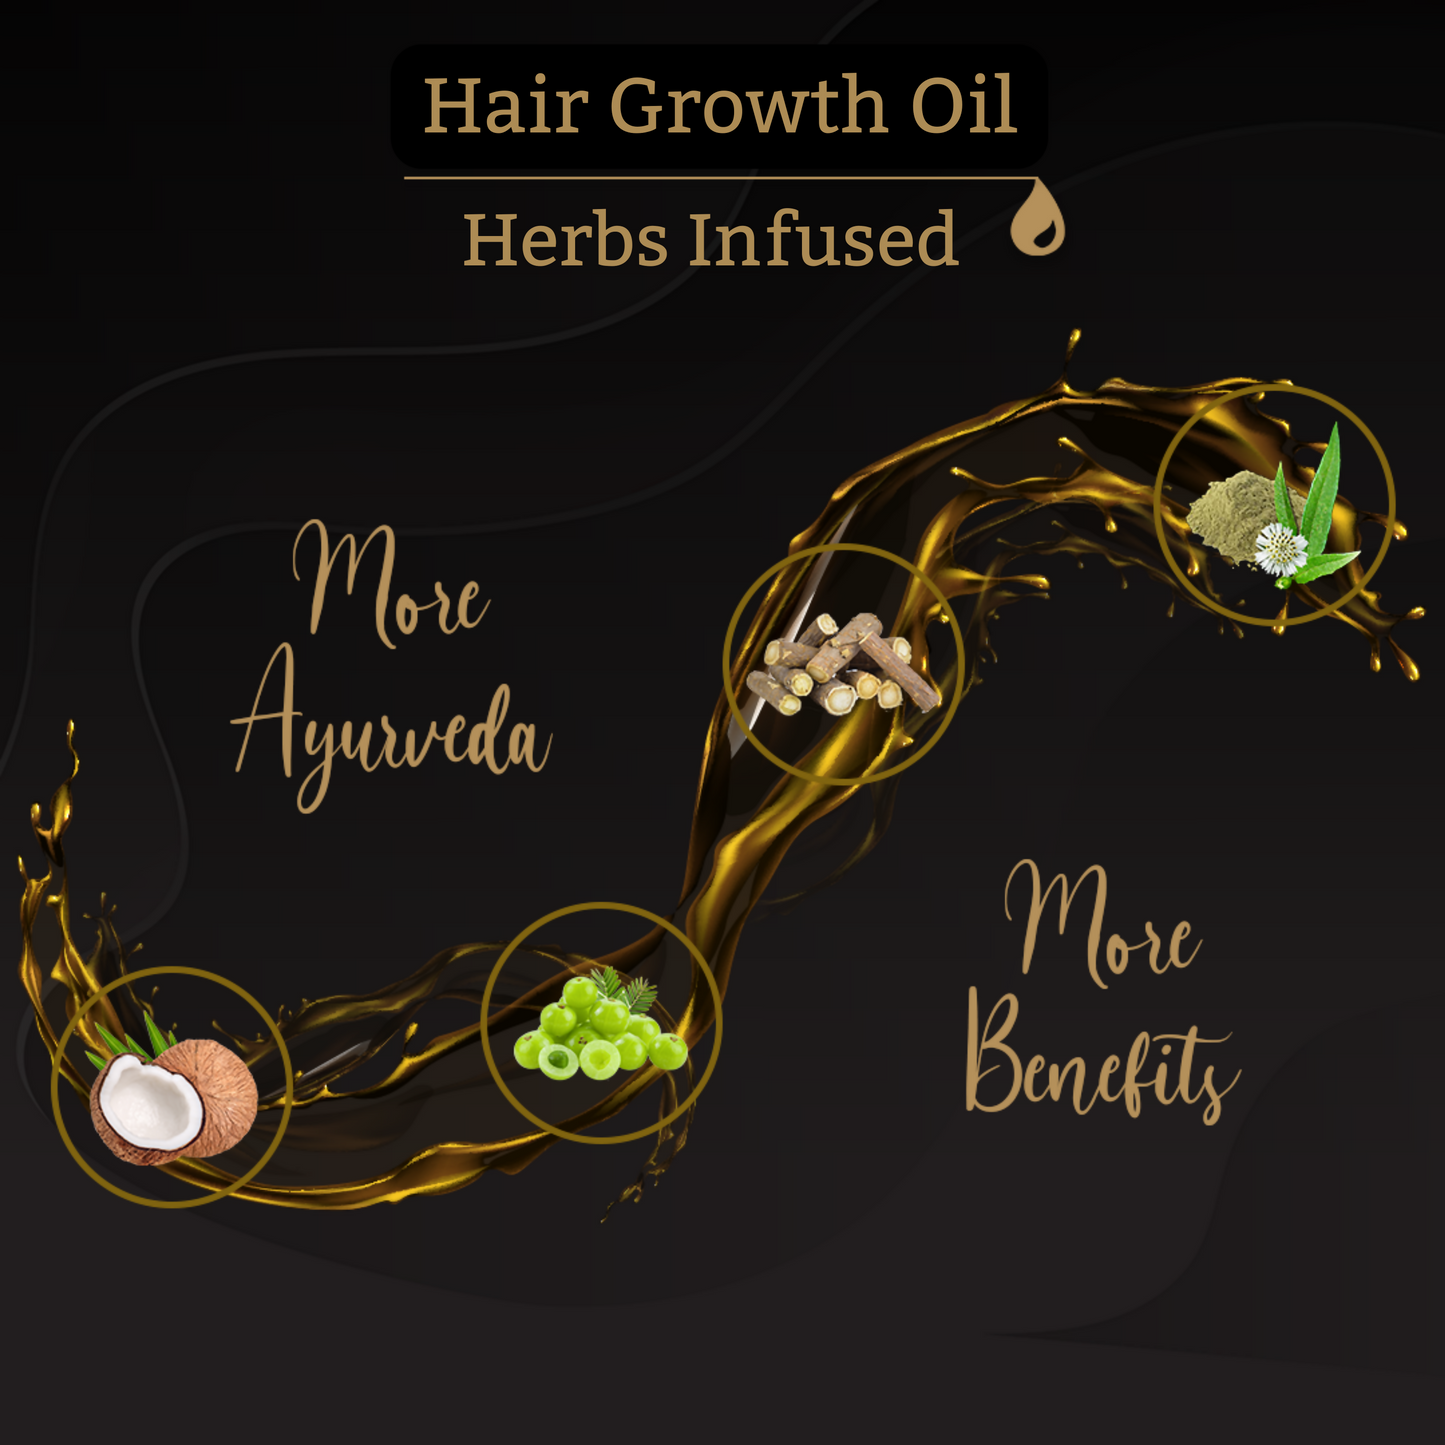 Prakruth Care Ayurvedic Hair Growth Oil